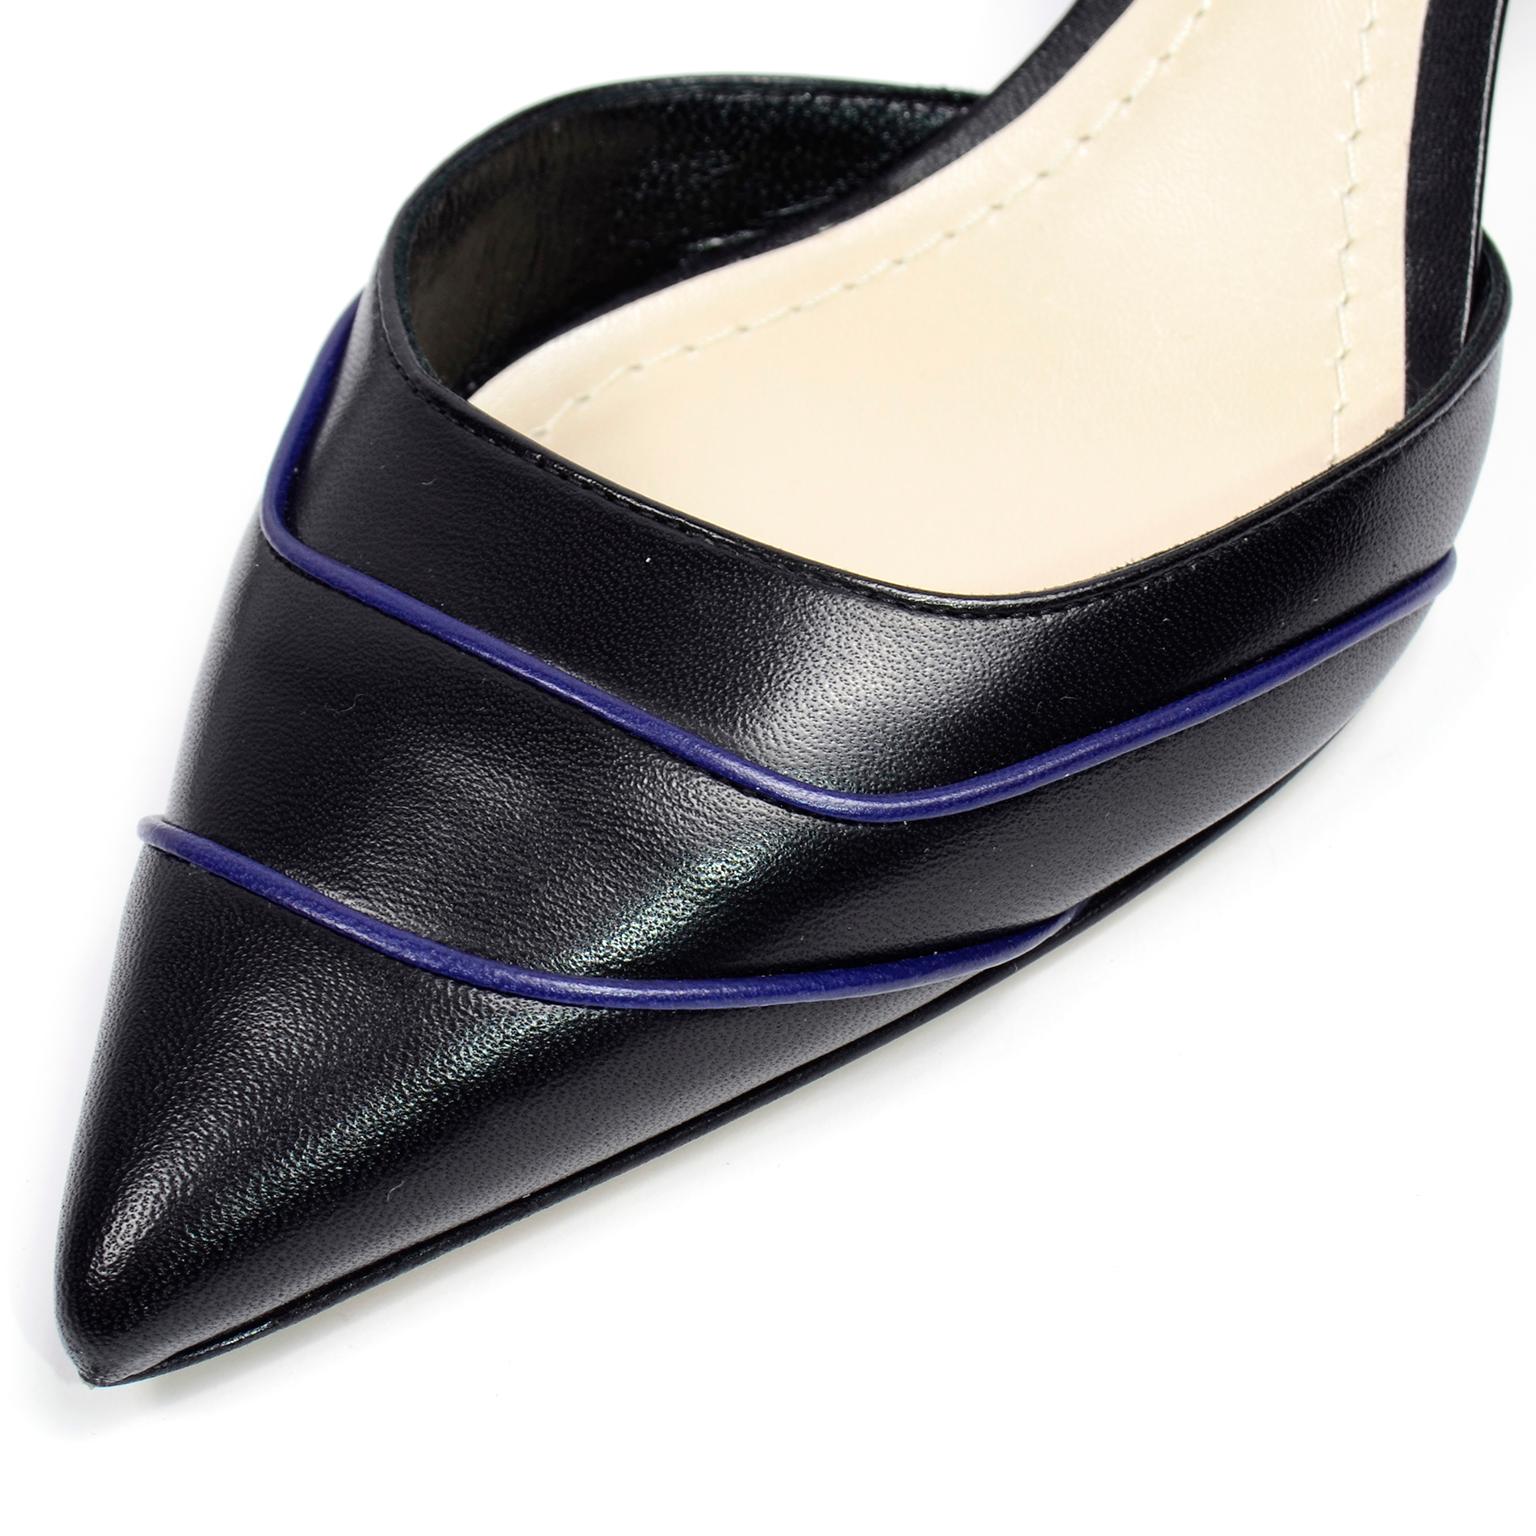 Women's Christian Dior Black and Blue D'Orsay Pumps W Original Box & Shoe Bags